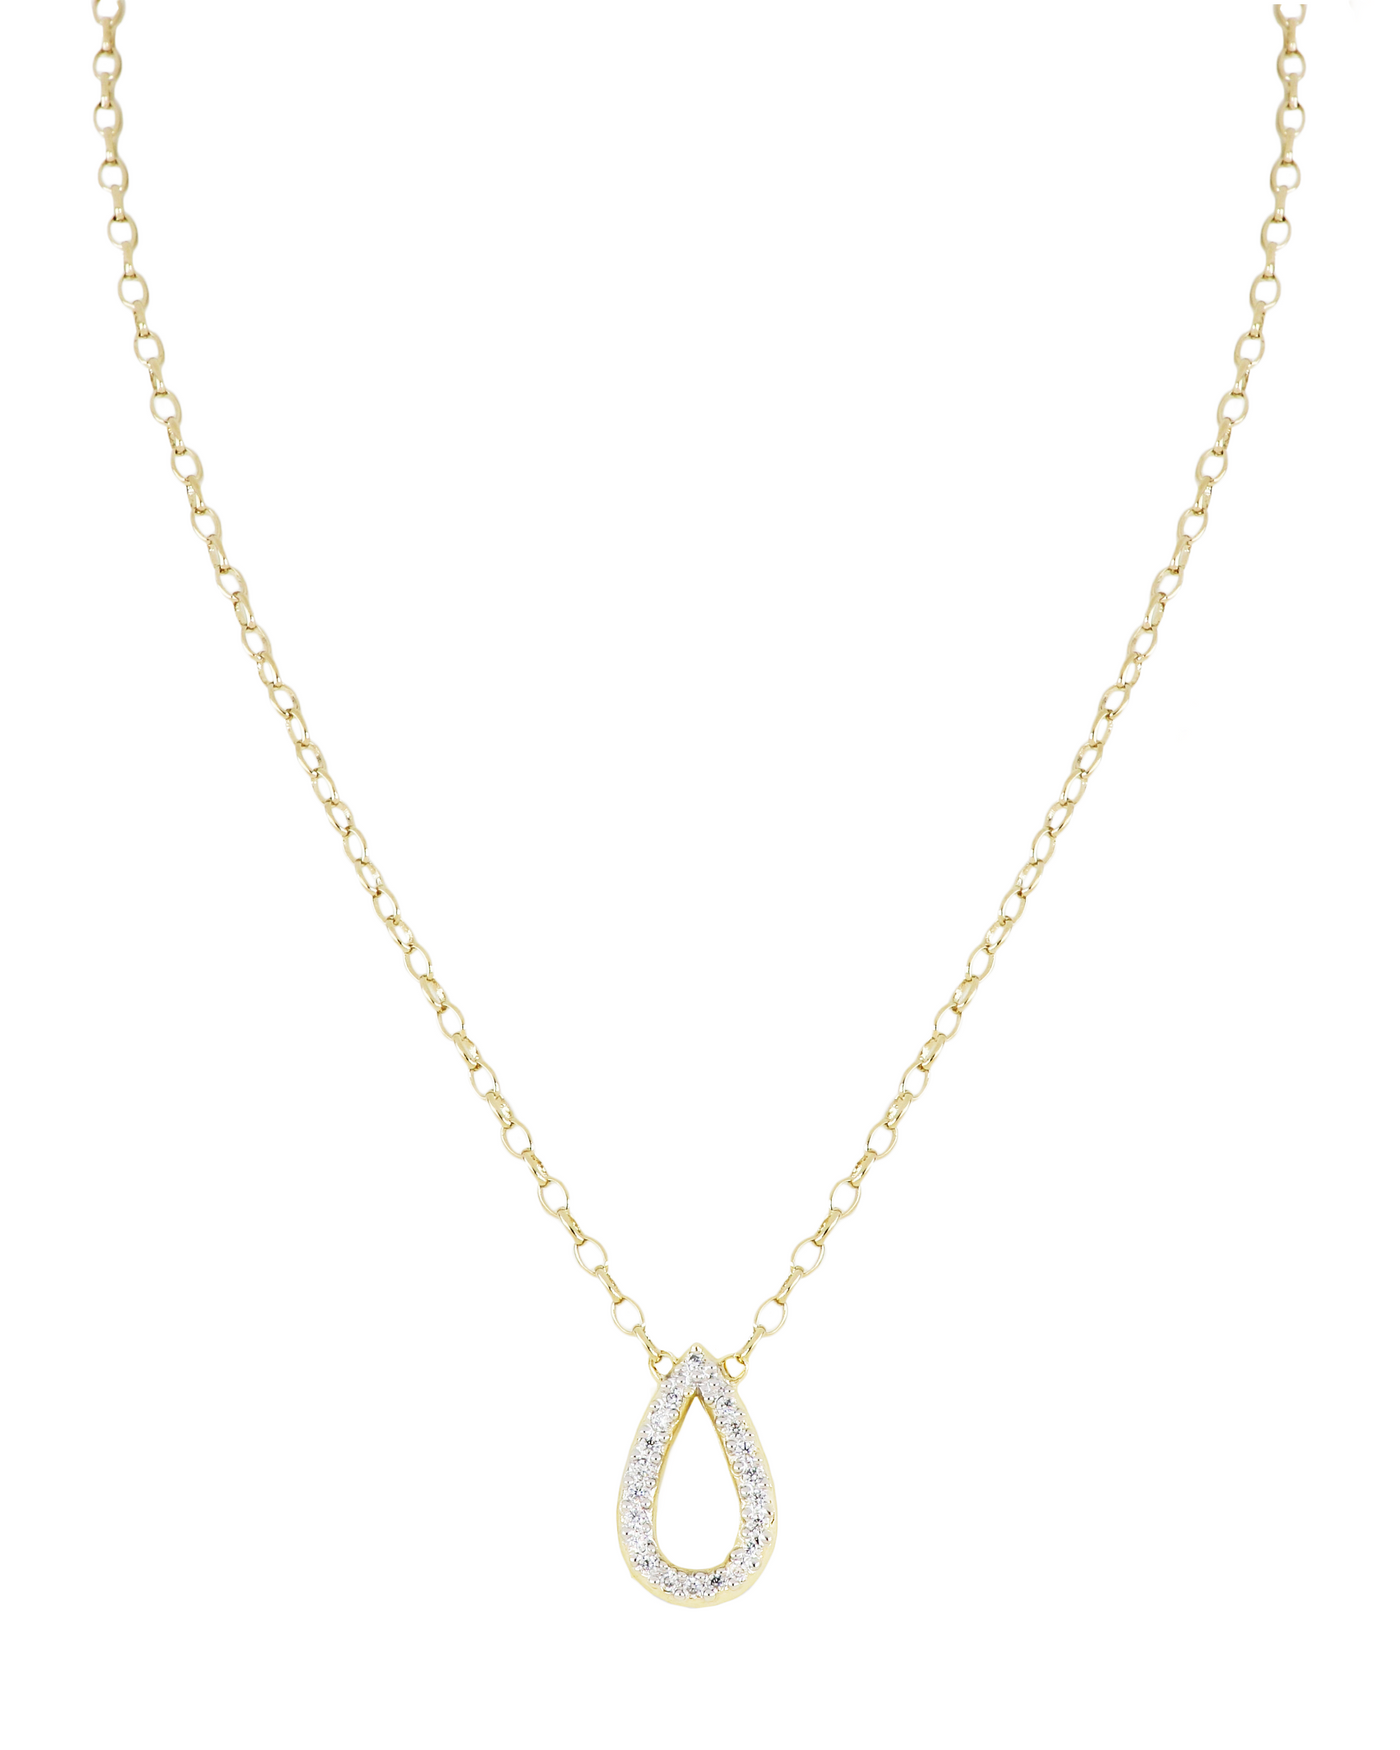 Aldrava Collection - Teardrop Pavé Necklace in Gold